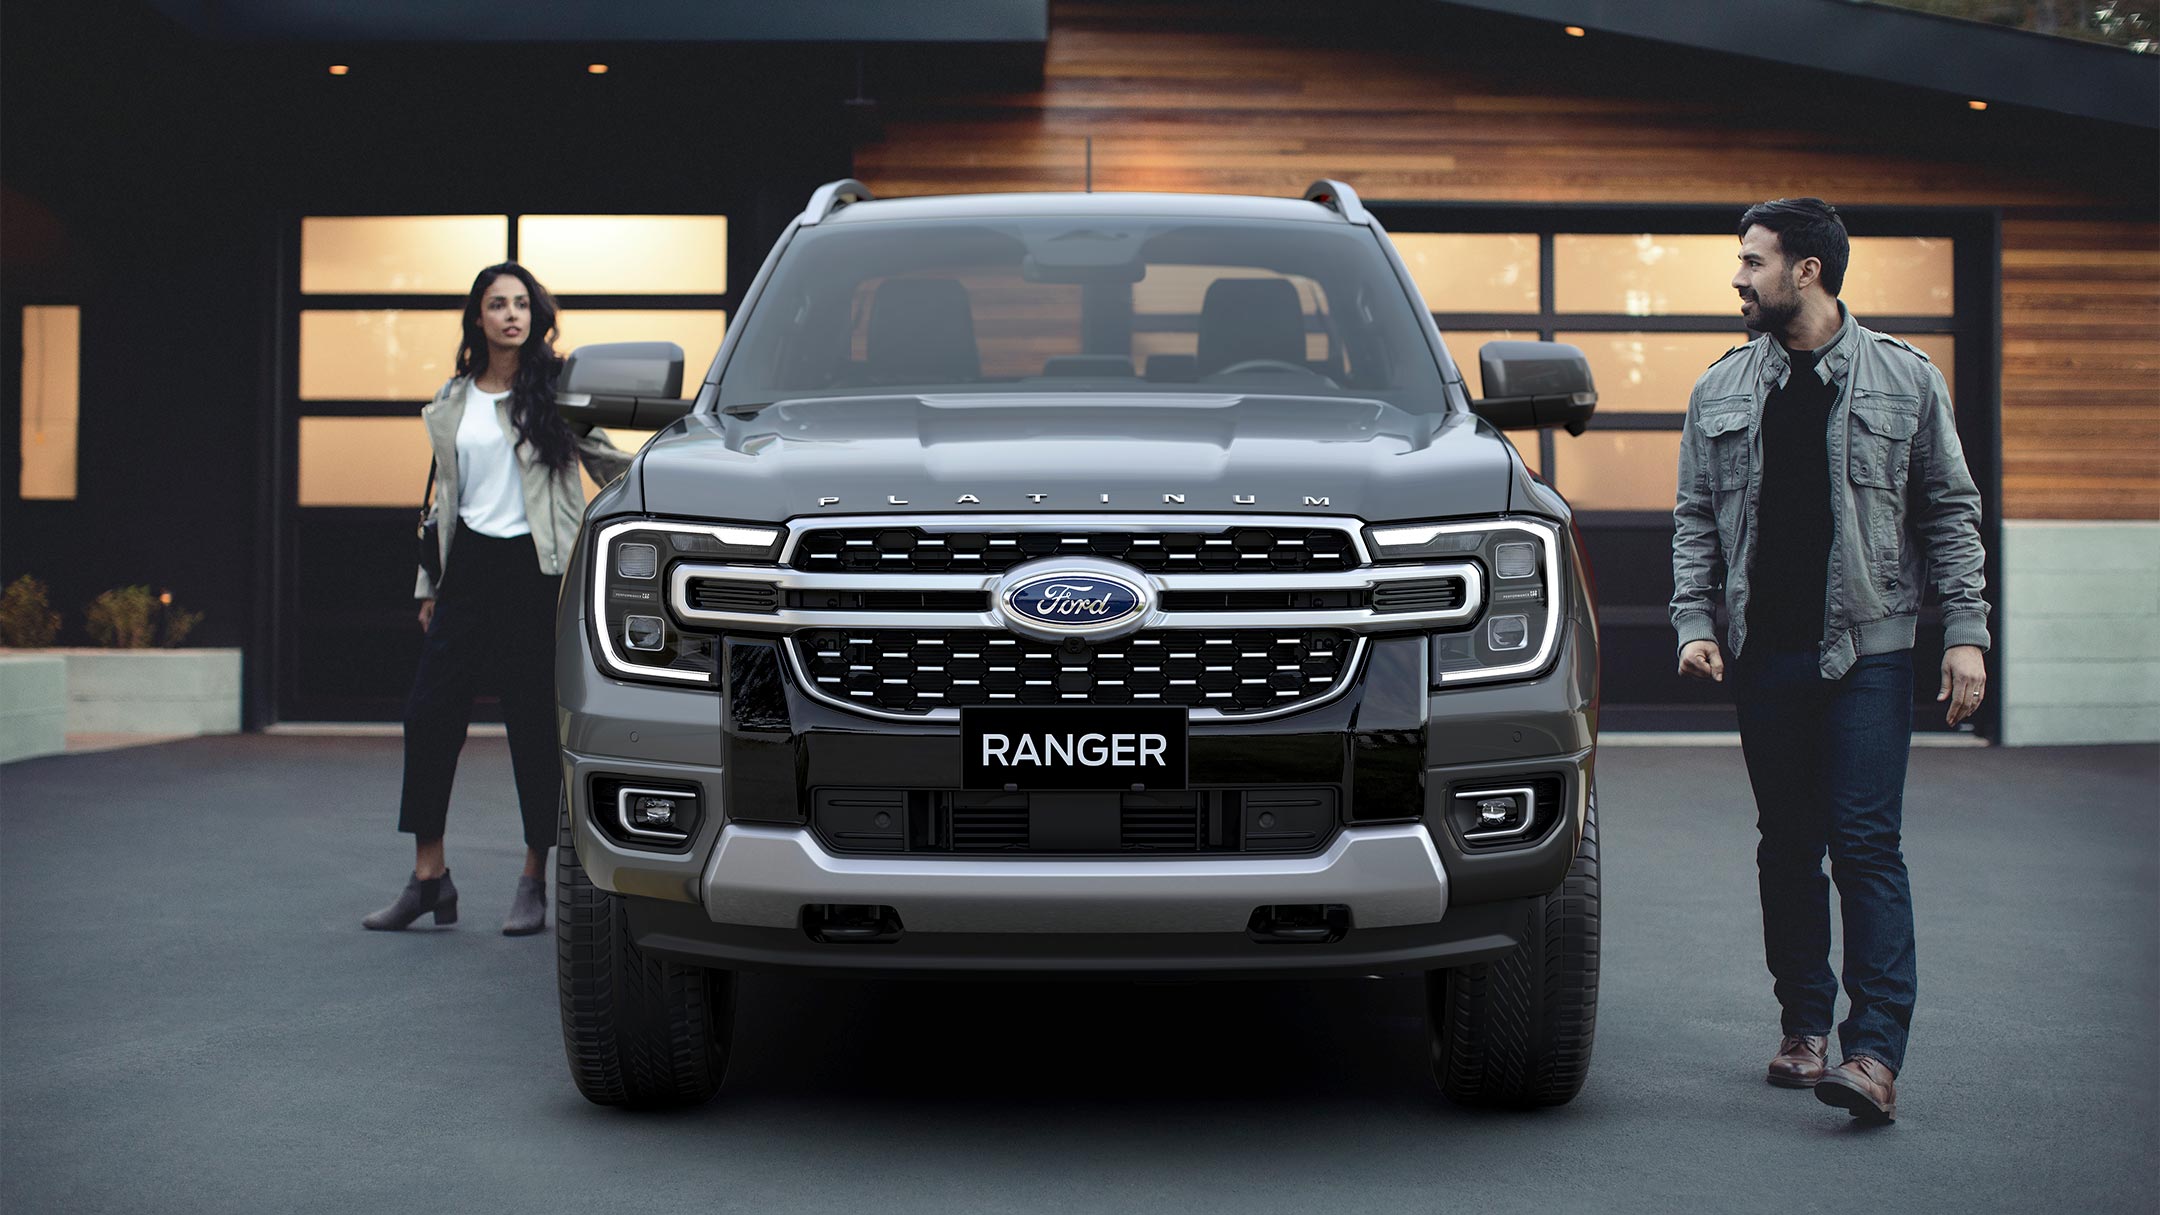 Ford Ranger Platinum front view